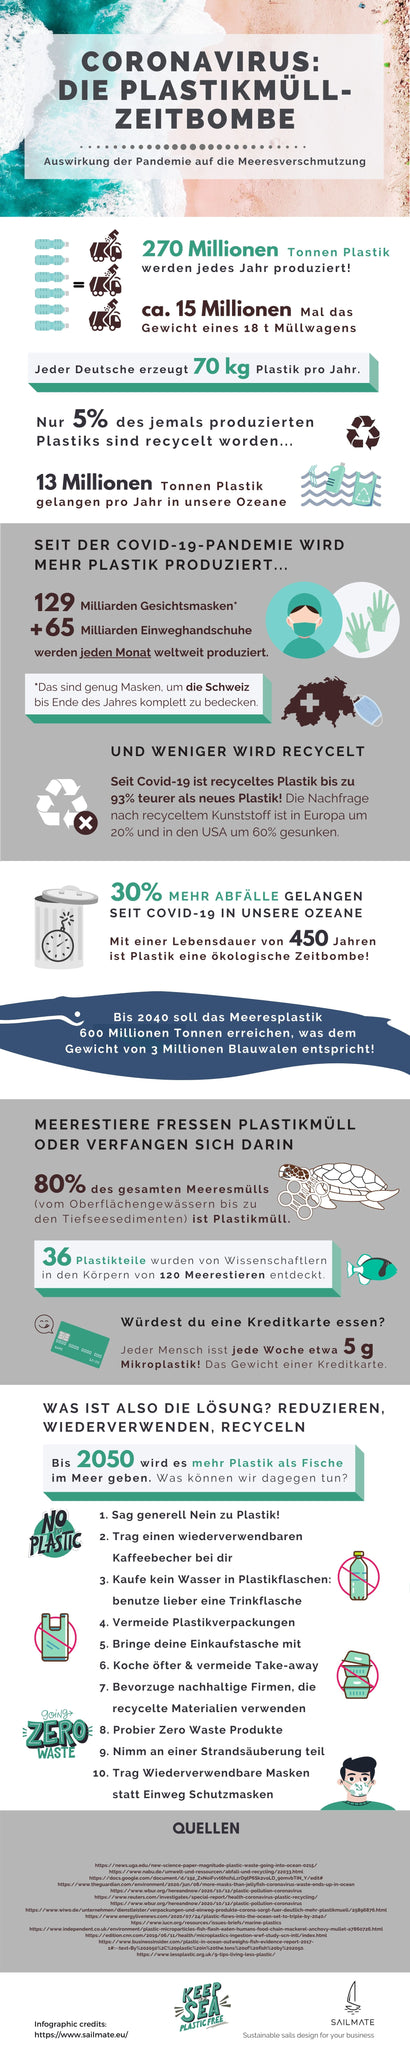 Infografik von Sailmate: Coronavirus, die Plastikmüll-Zeitbombe